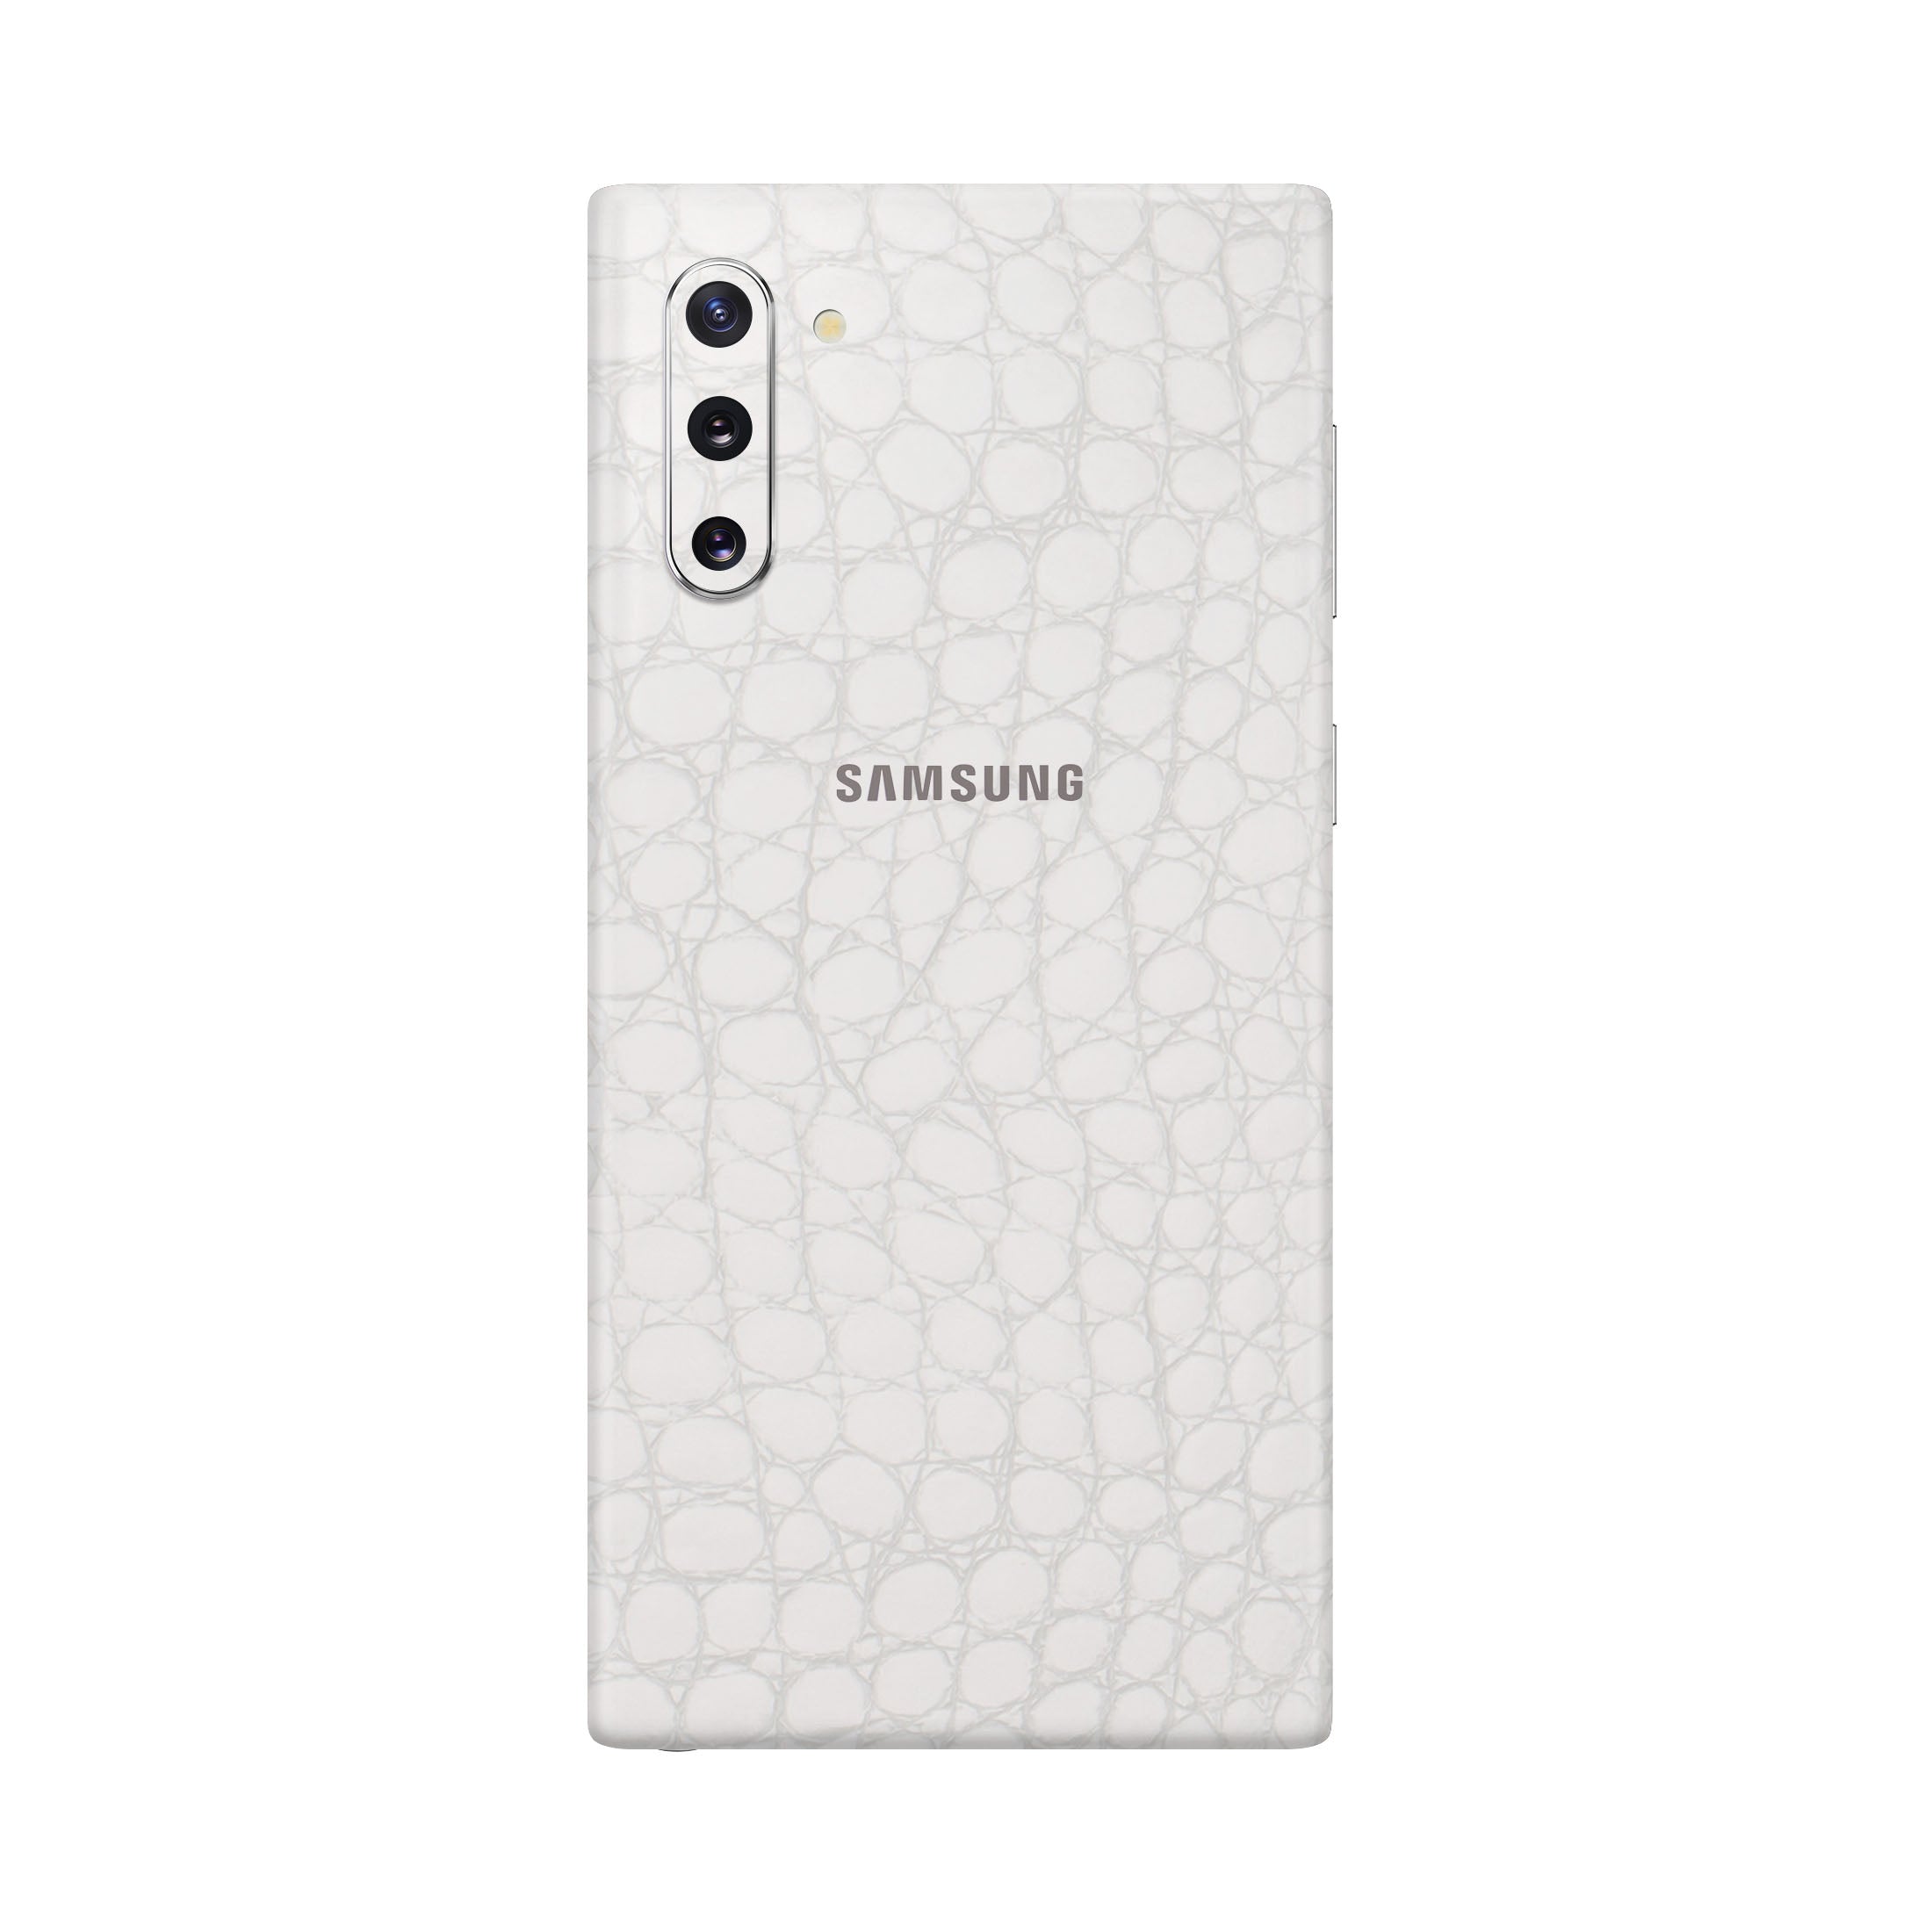 Crocodile White Skin for Samsung Note 10